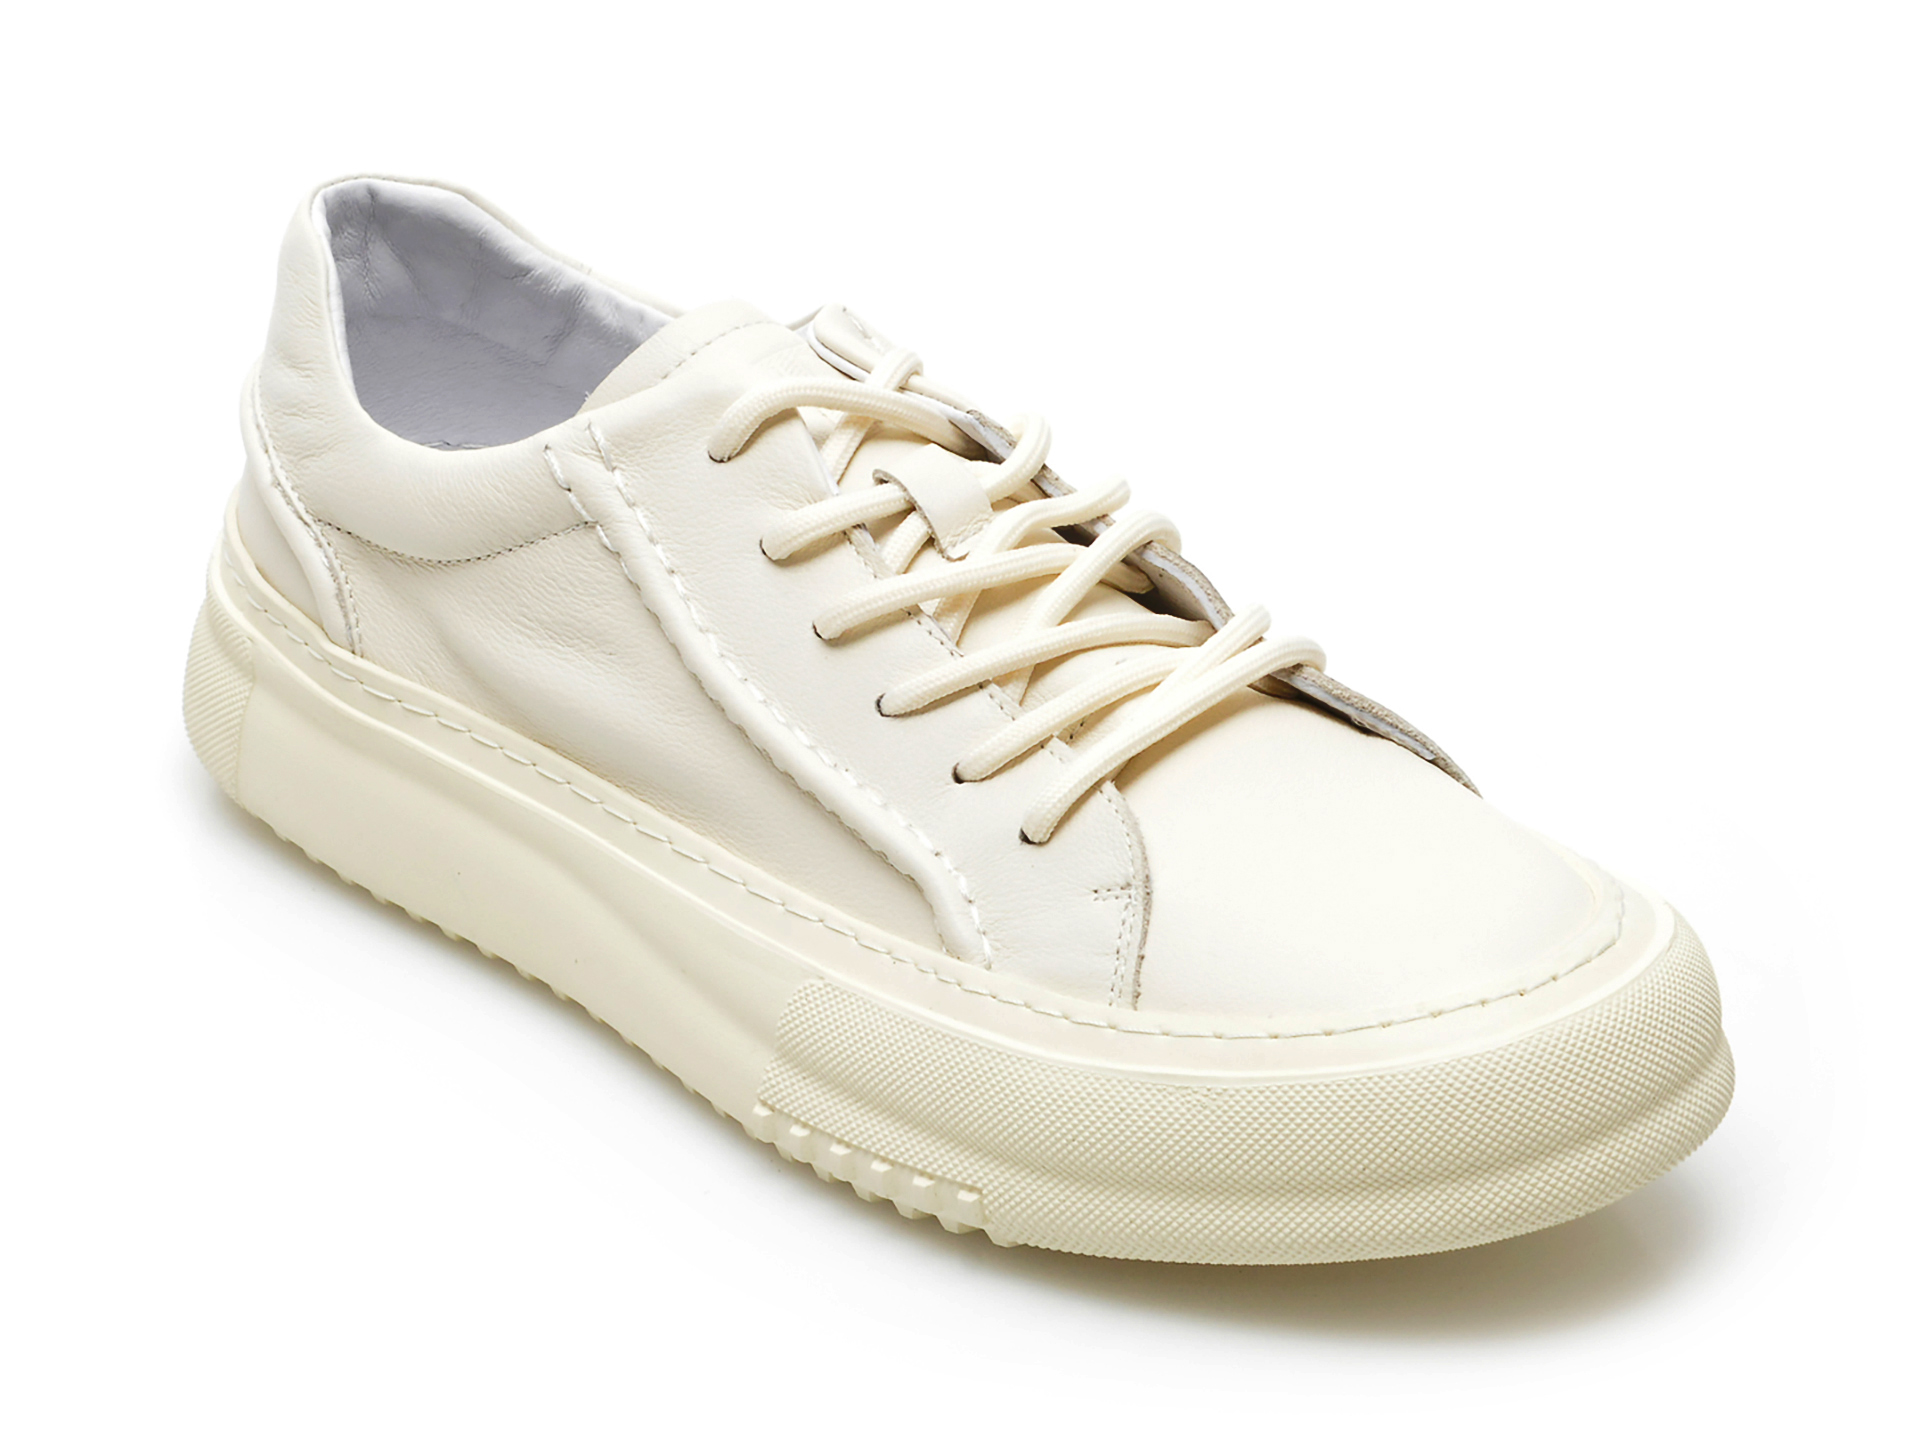 Pantofi OTTER albi, 909, din piele naturala Otter